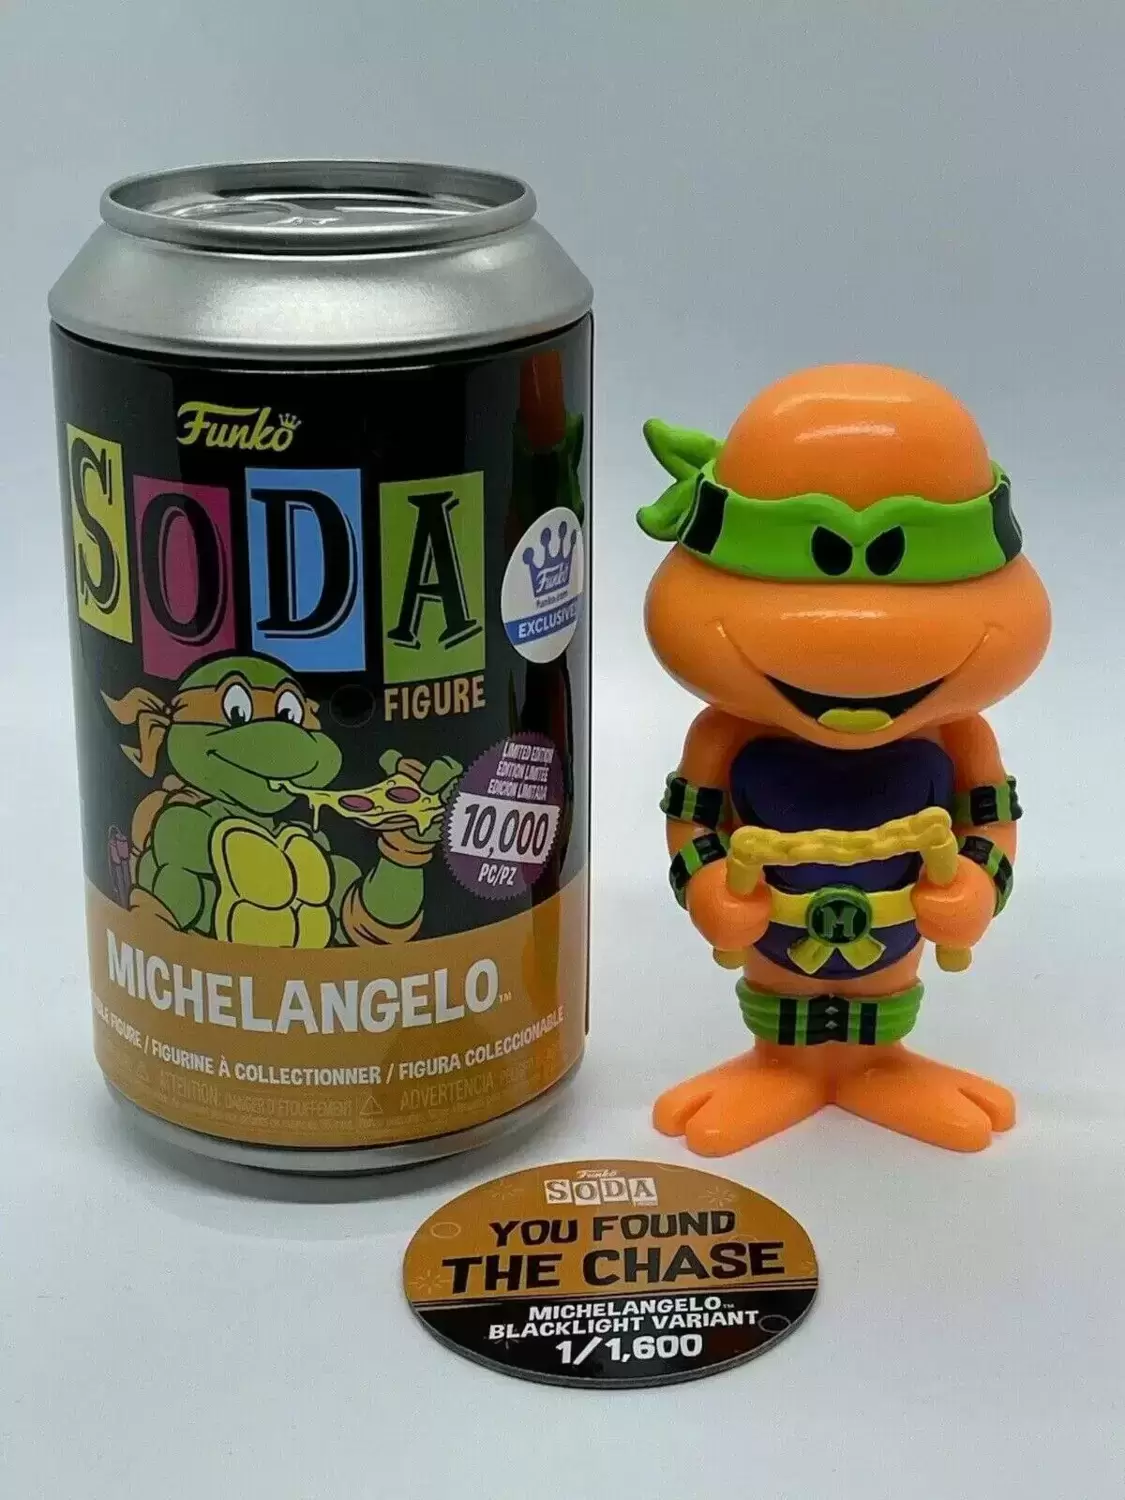 Vinyl Soda! - Teenage Mutant Ninja Turtles - Michelangelo Blacklight Chase